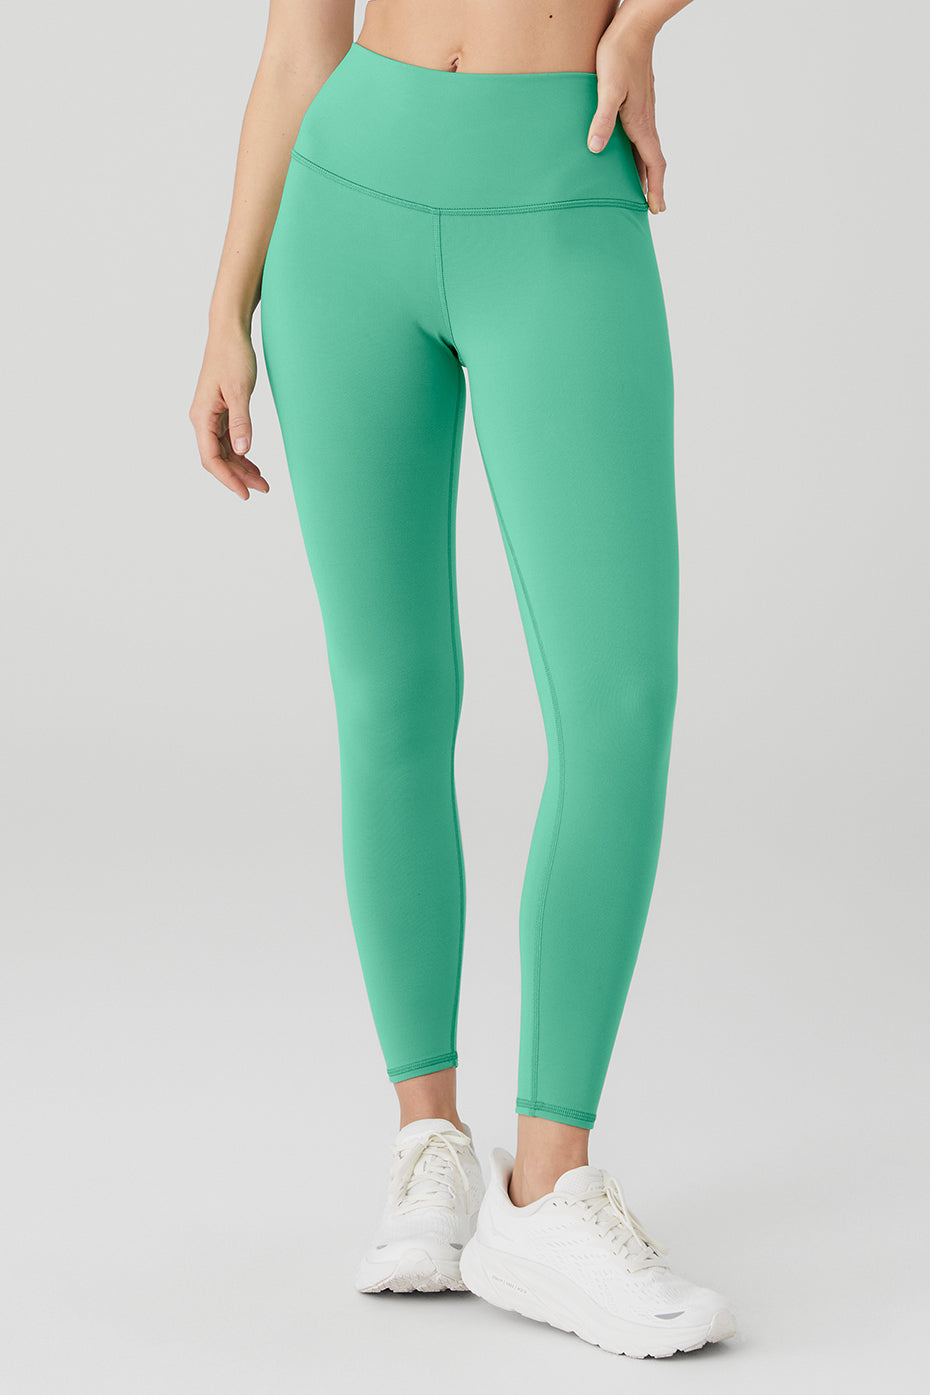 Alo Yoga 7/8 airbrush leggings Size XS - $40 - From Julia